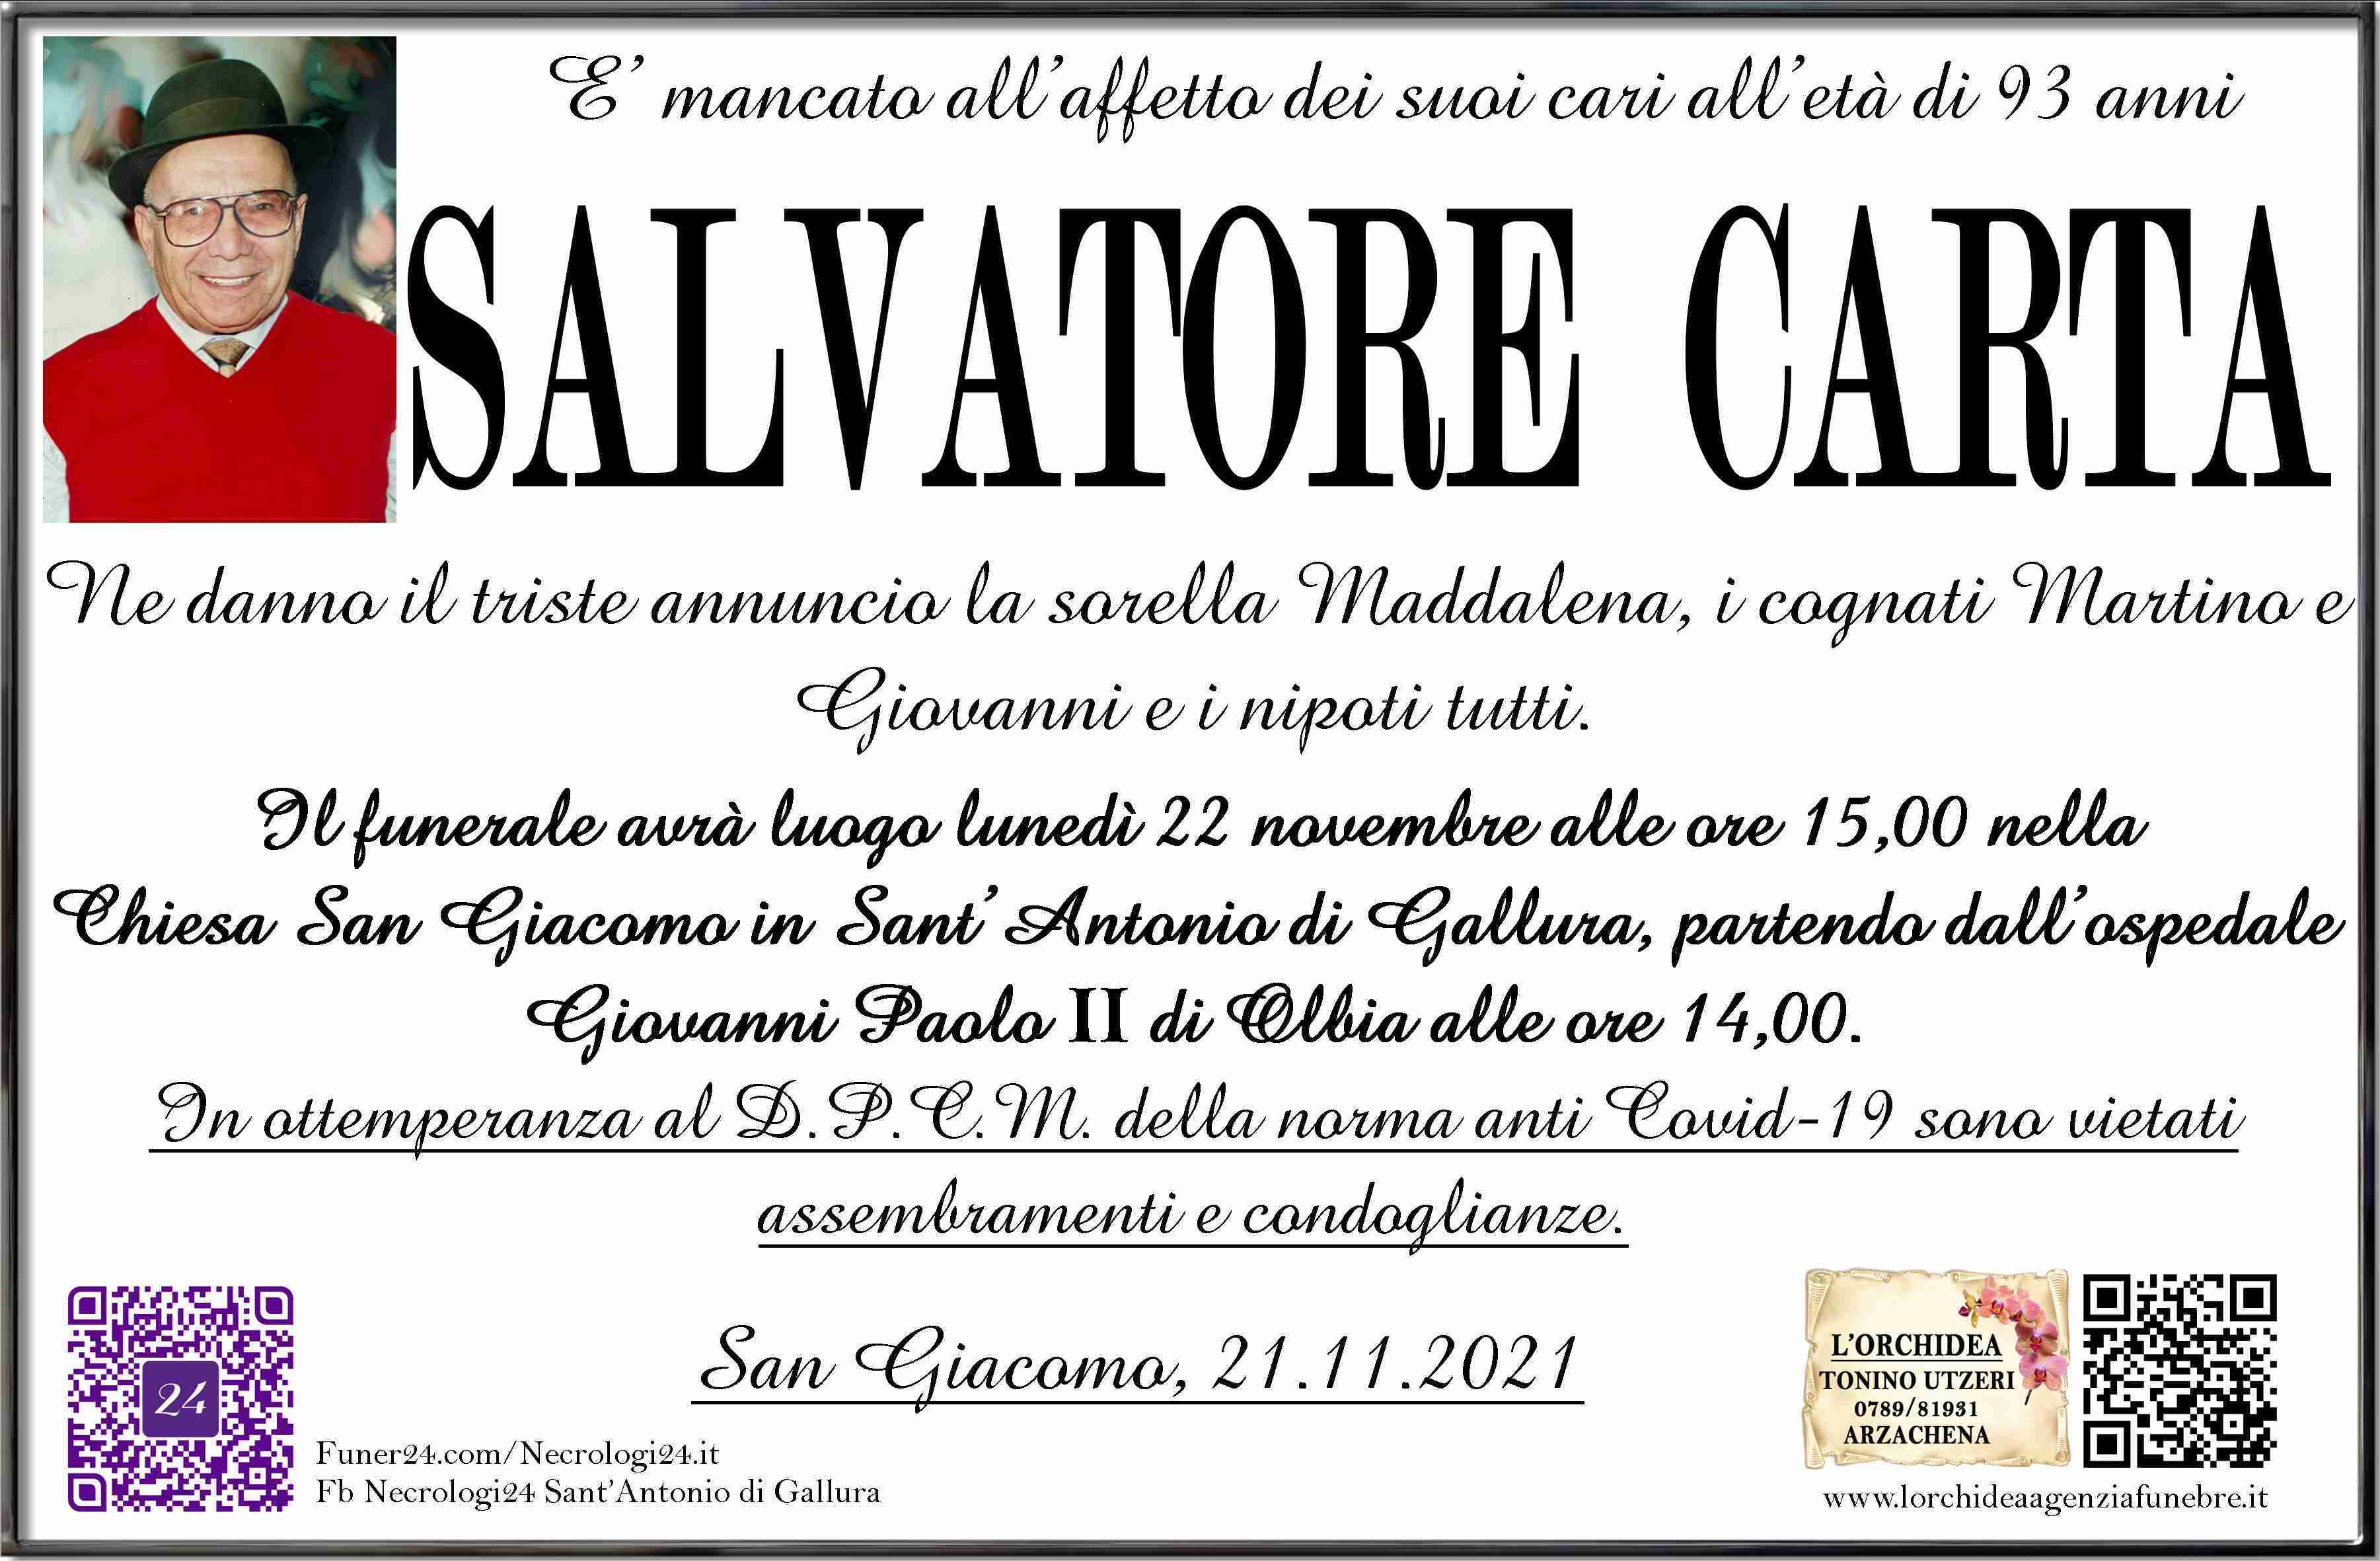 Salvatore Carta